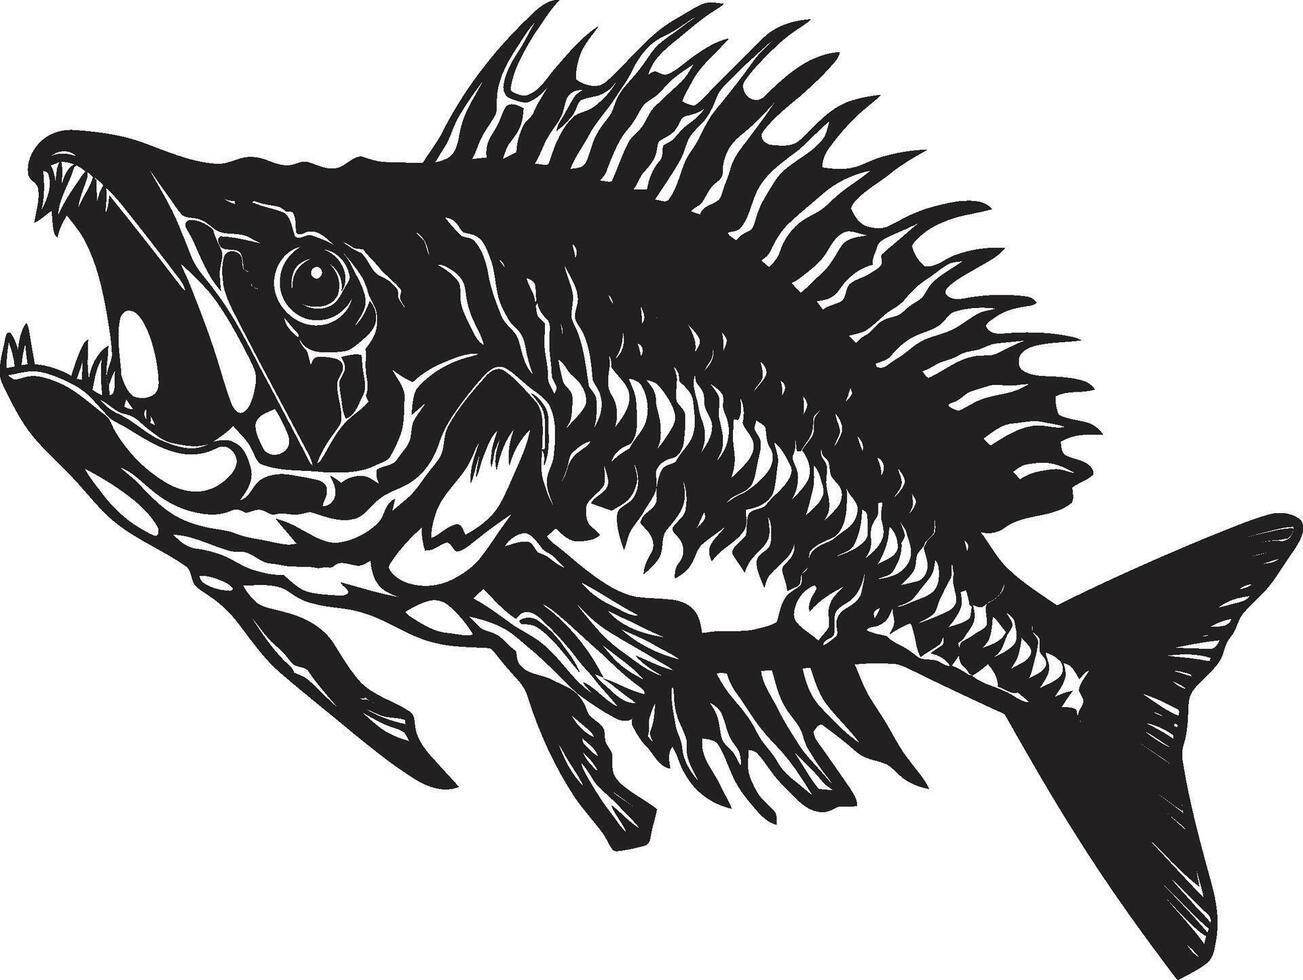 Grisly Glyphs Logo of Predator Fish Skeleton in Black Eerie Exoskeleton Black Iconic Predator Fish Skeleton Design vector